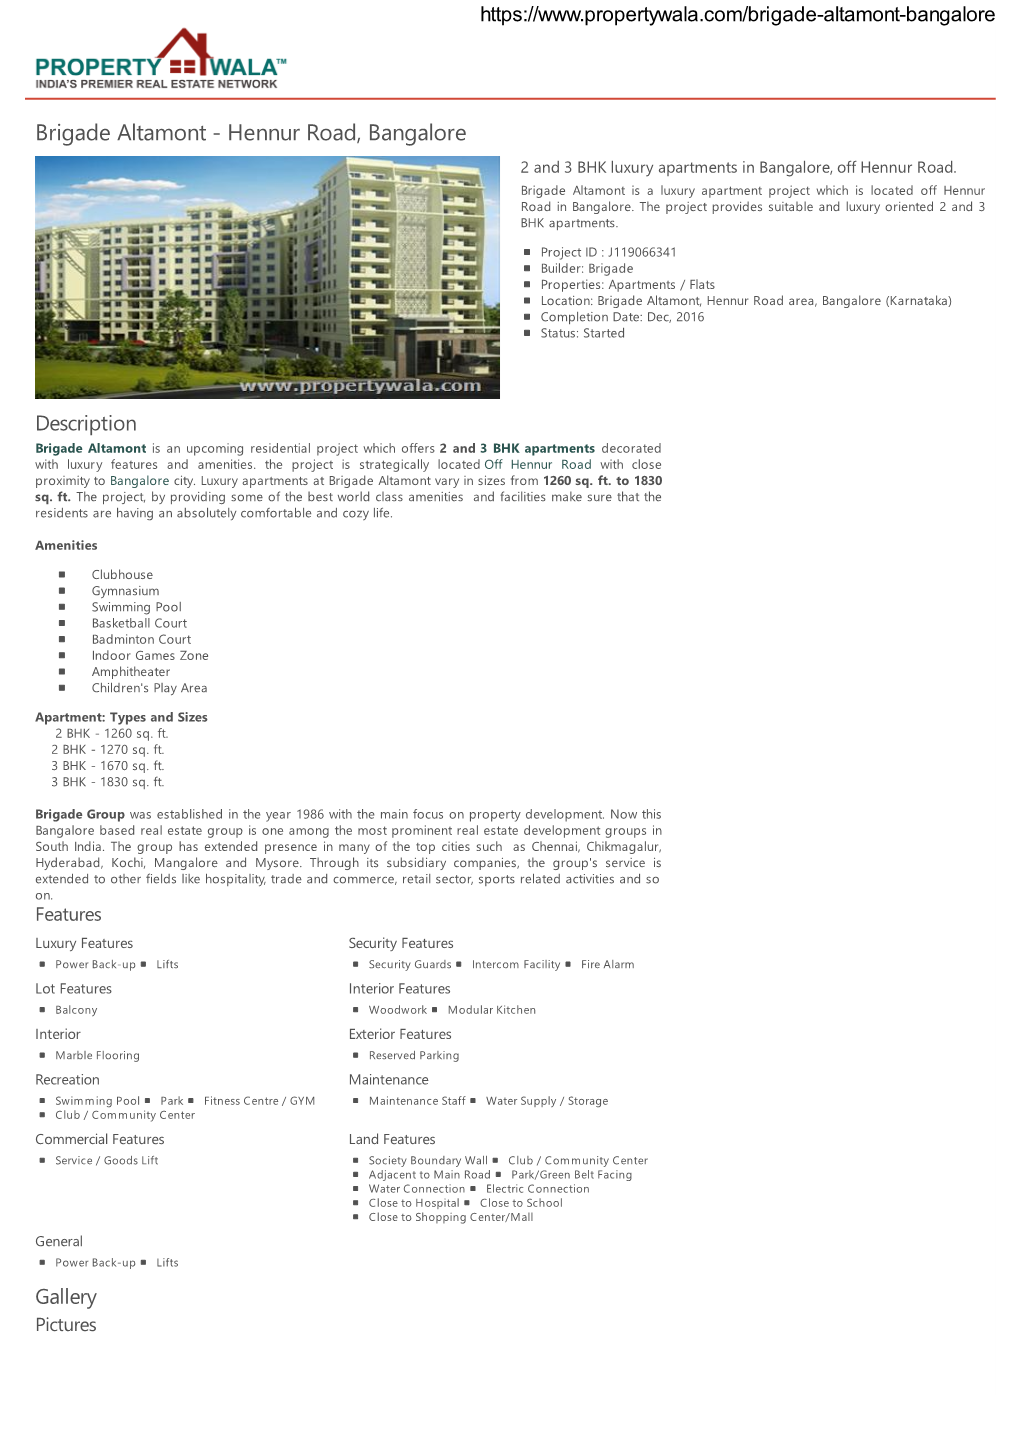 Brigade Altamont - Hennur Road, Bangalore 2 and 3 BHK Luxury Apartments in Bangalore, Off Hennur Road